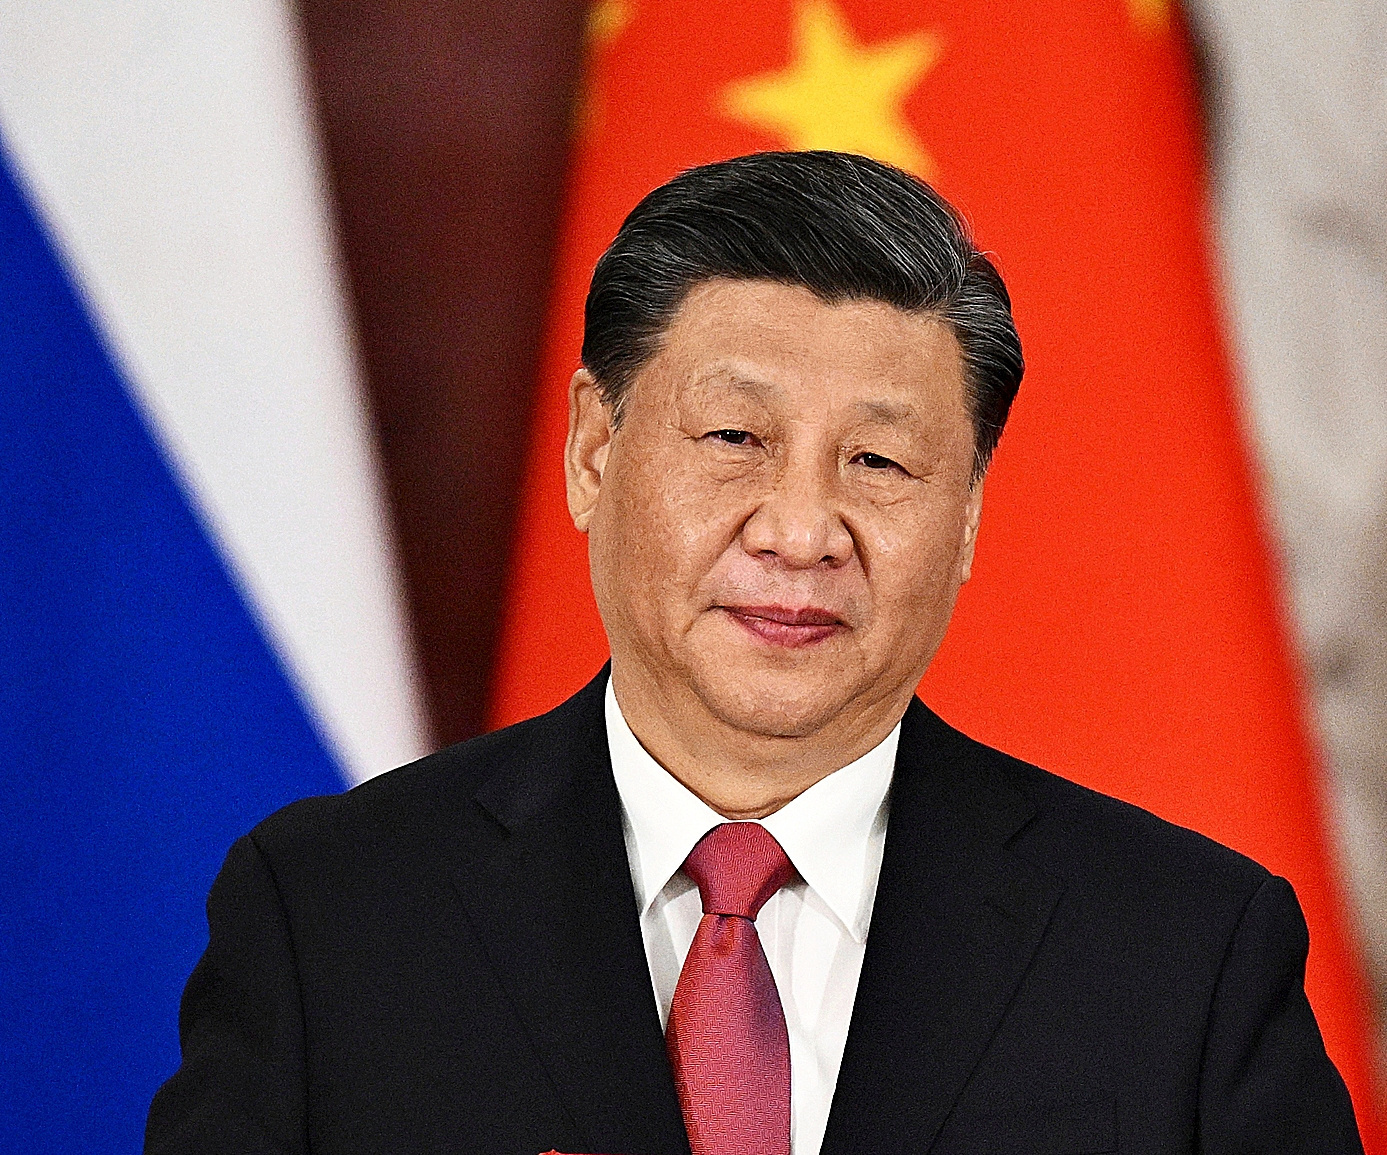 La hiperactividad diplomática de Xi interpela a la UE